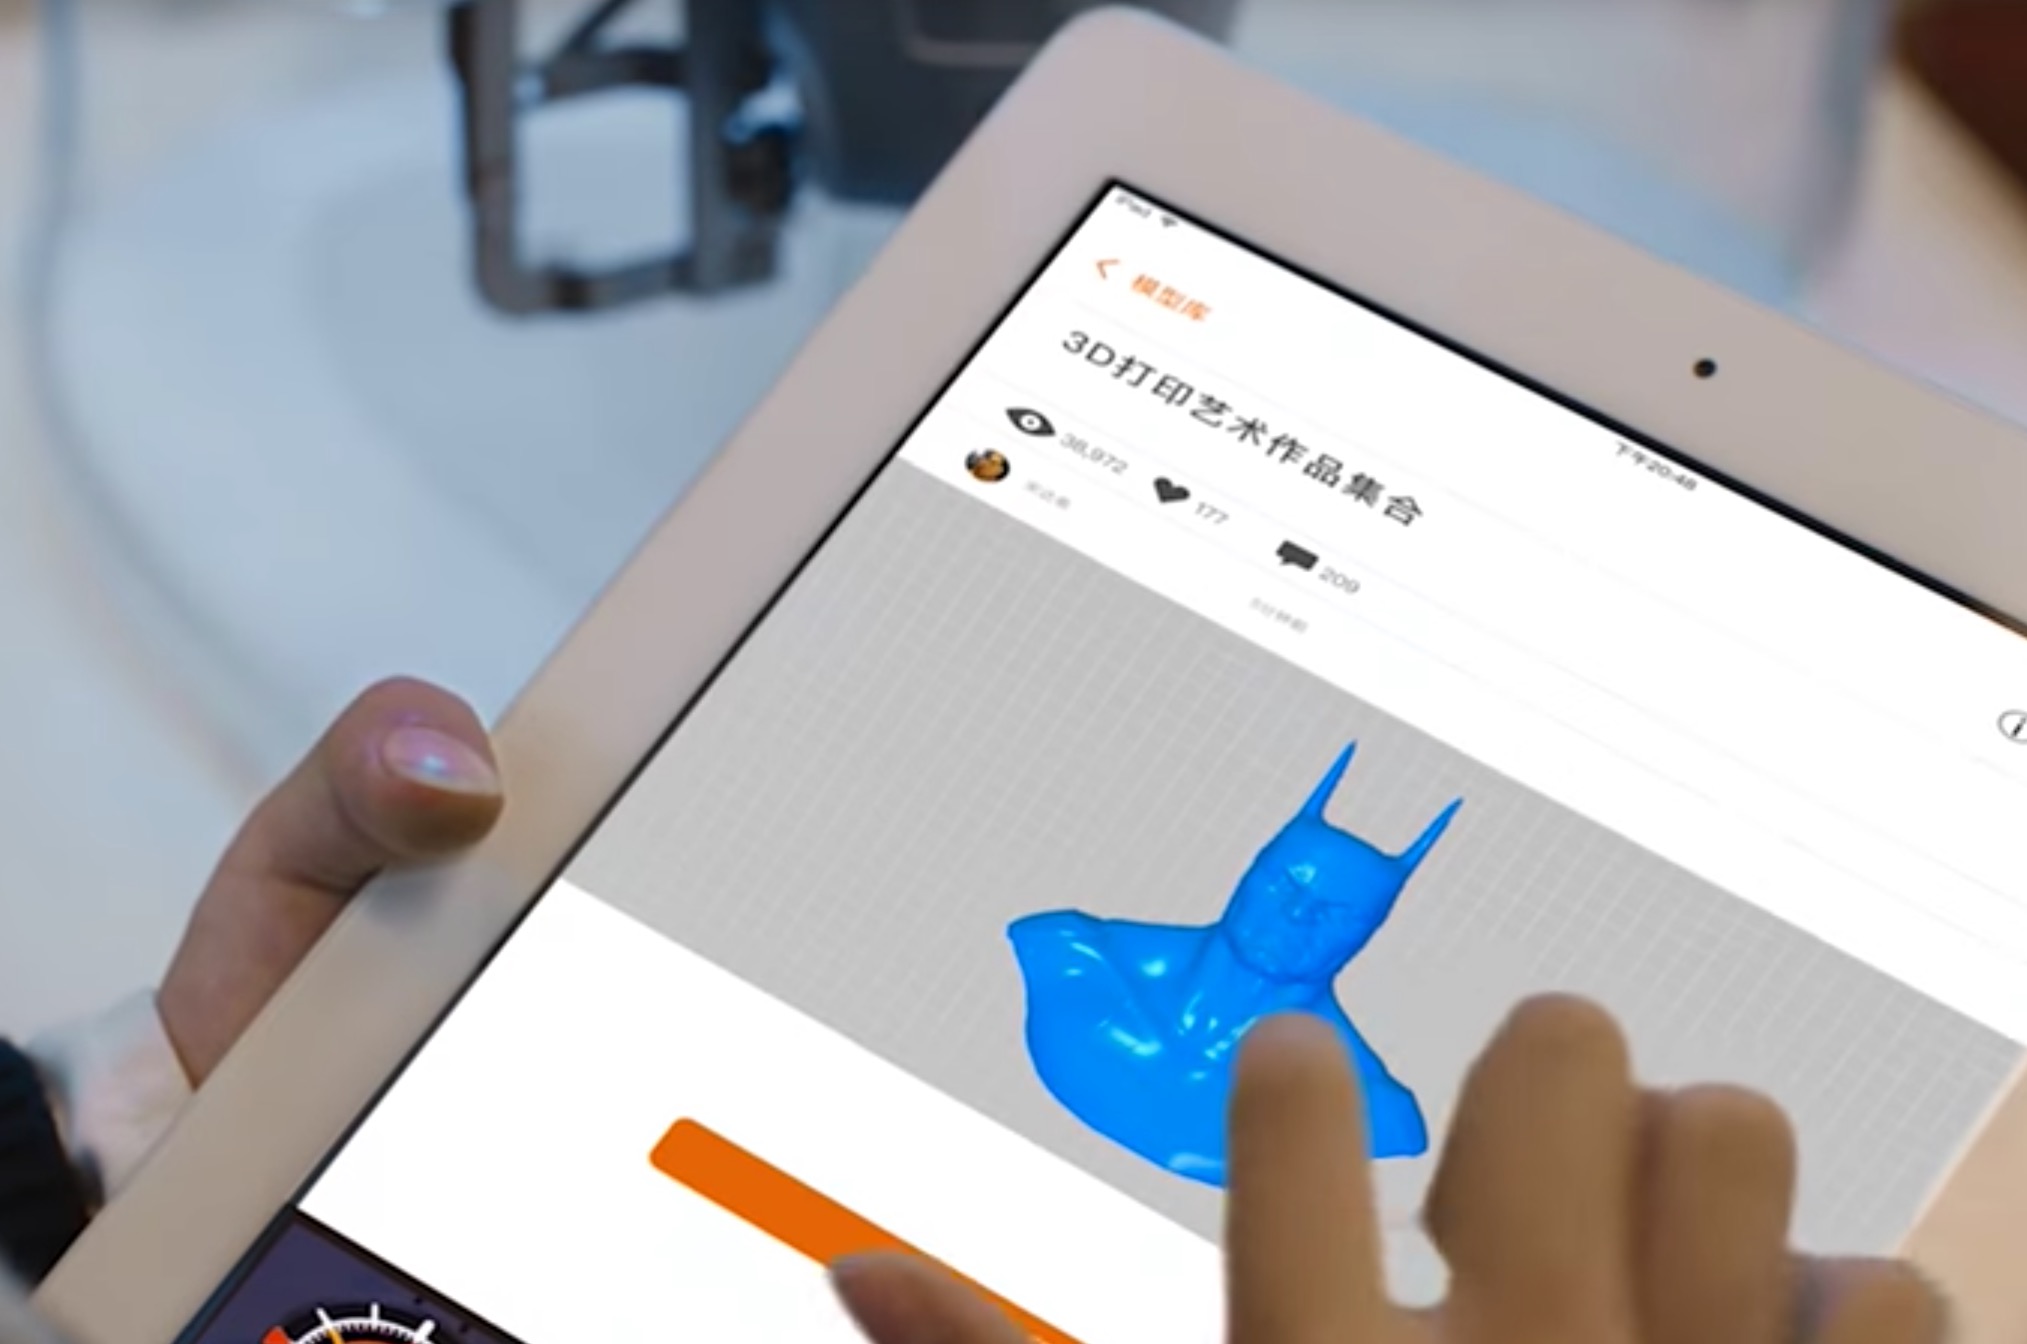  The companion app for the Yeehaw desktop 3D printer for kids 